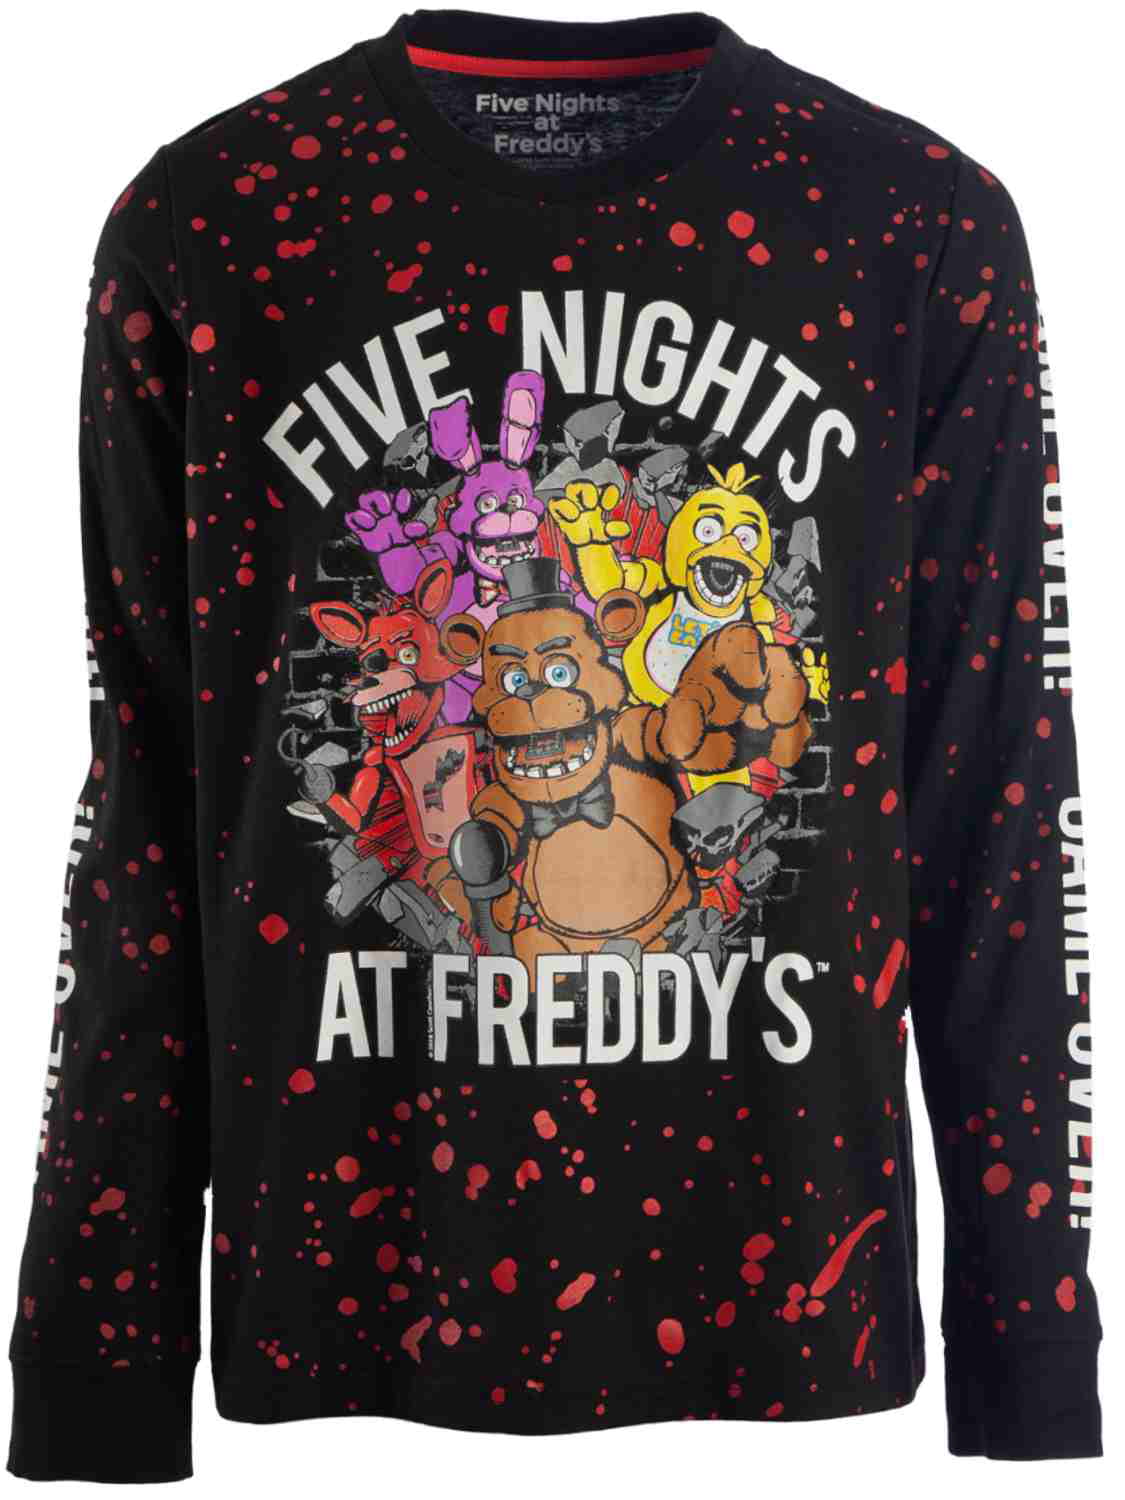 Five Nights At Freddy's Men's Black Tshirt Tees Clothing 